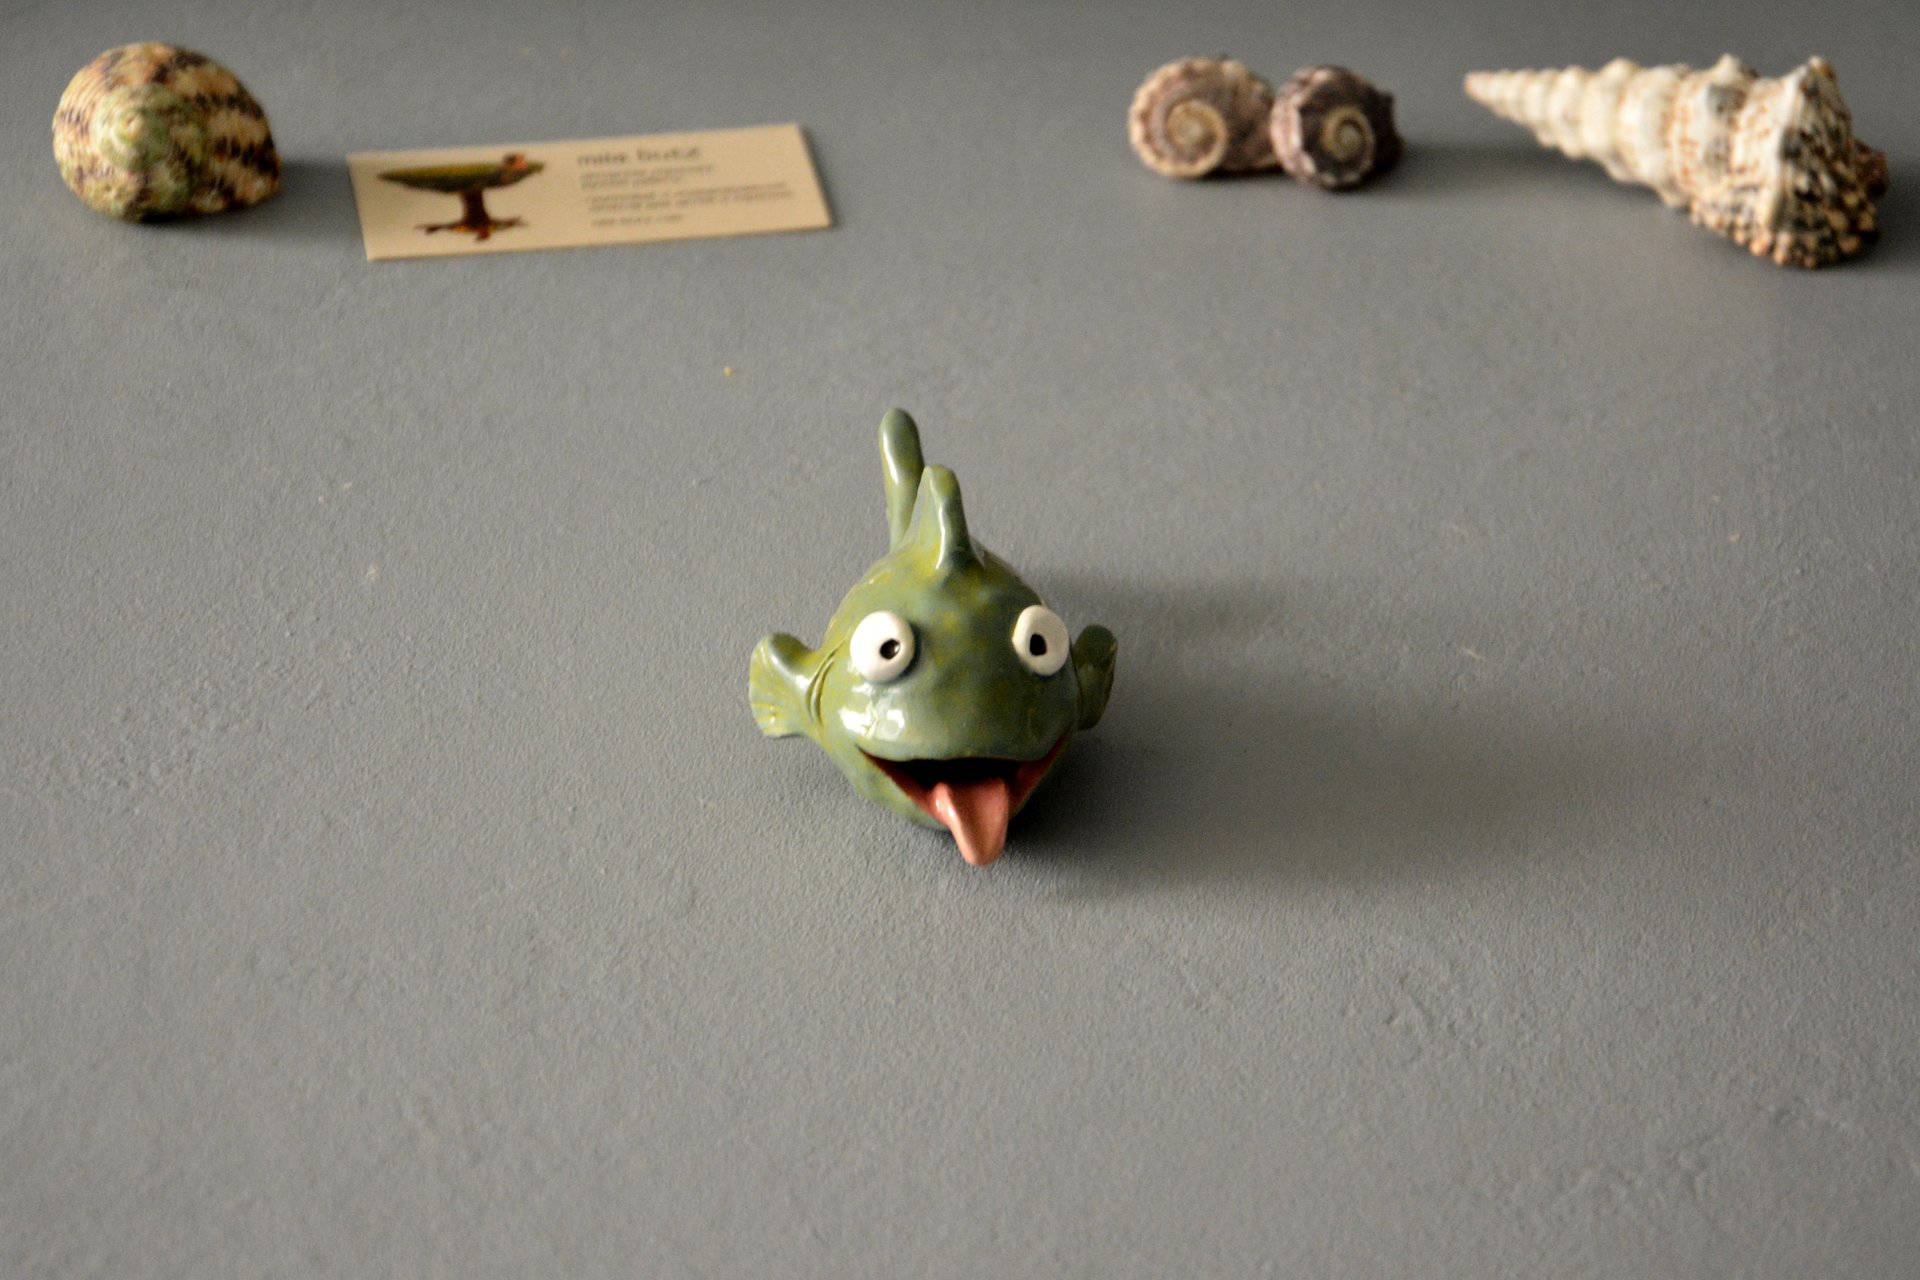 Ceramic fish figurine smiling, length - 12.5 cm, height - 6 cm, photo 3 of 6.